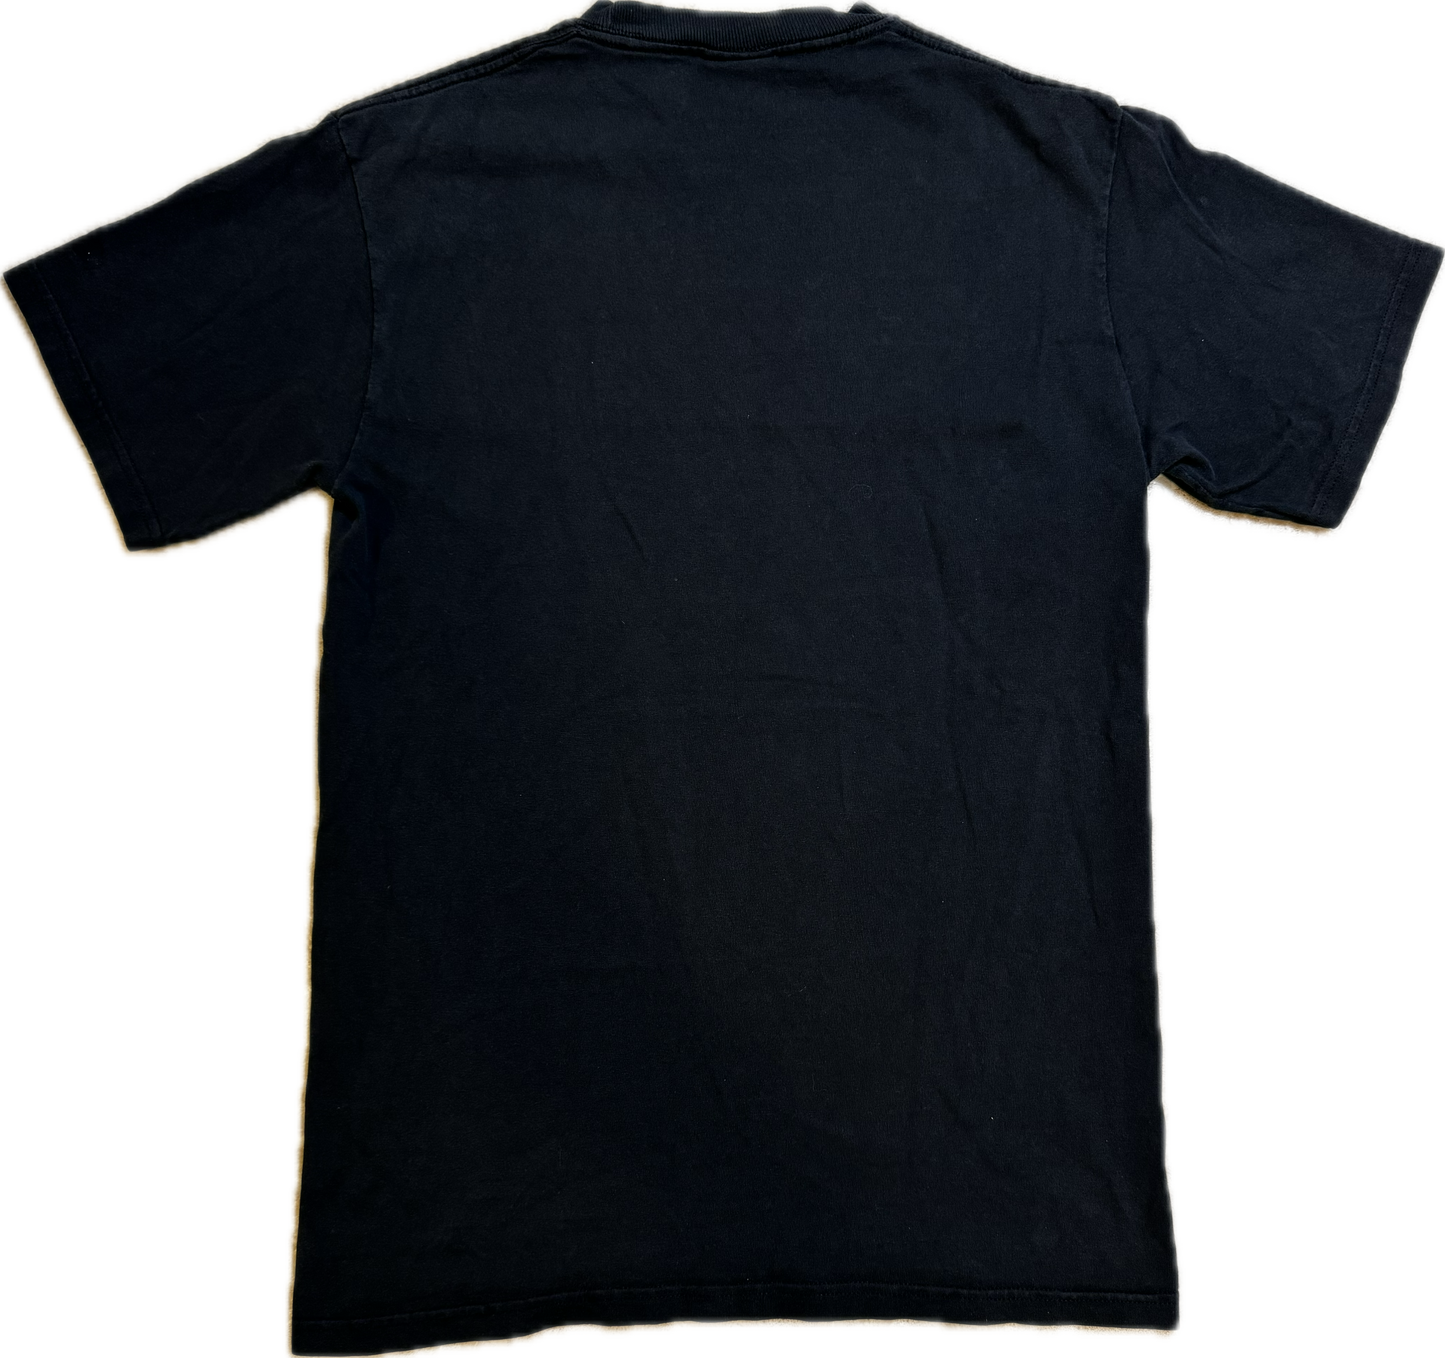 Vintage 1990's Berklee college of music T shirt